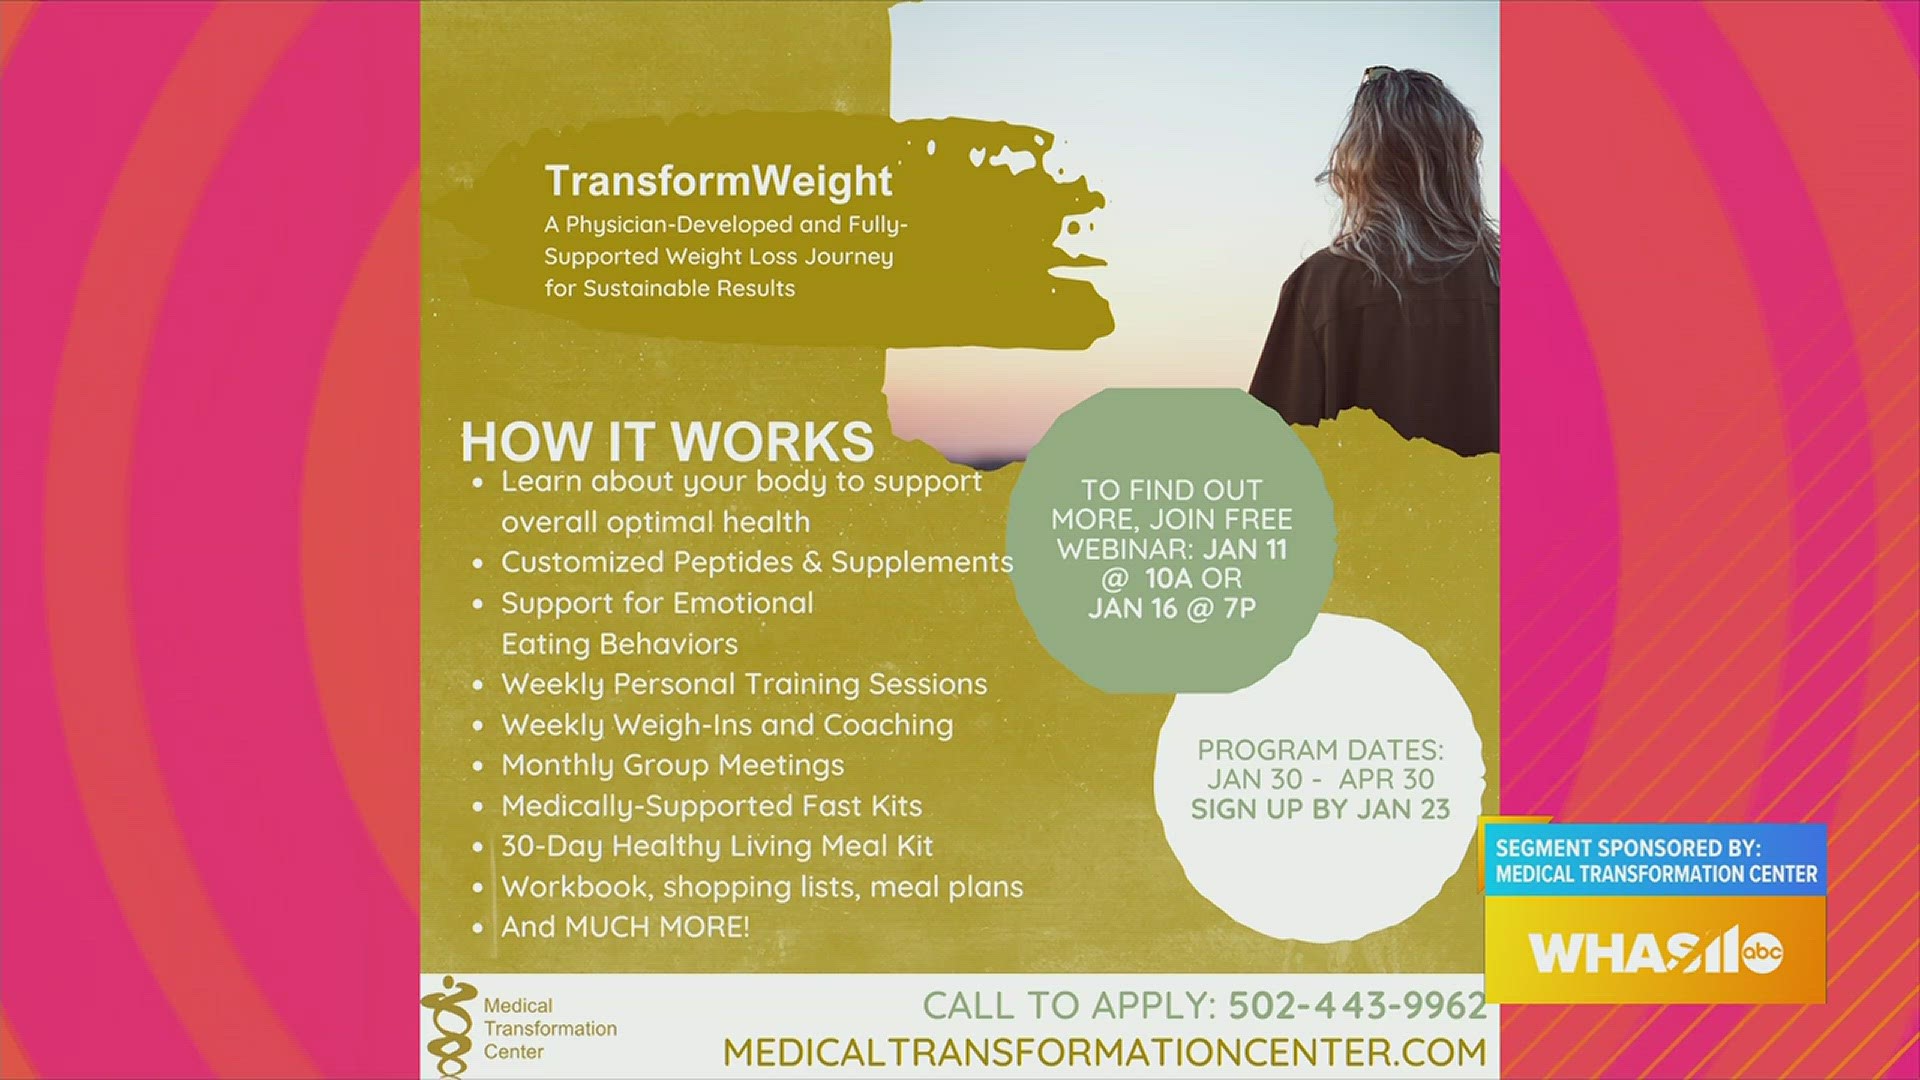 Learn more at medicaltransformationcenter.com